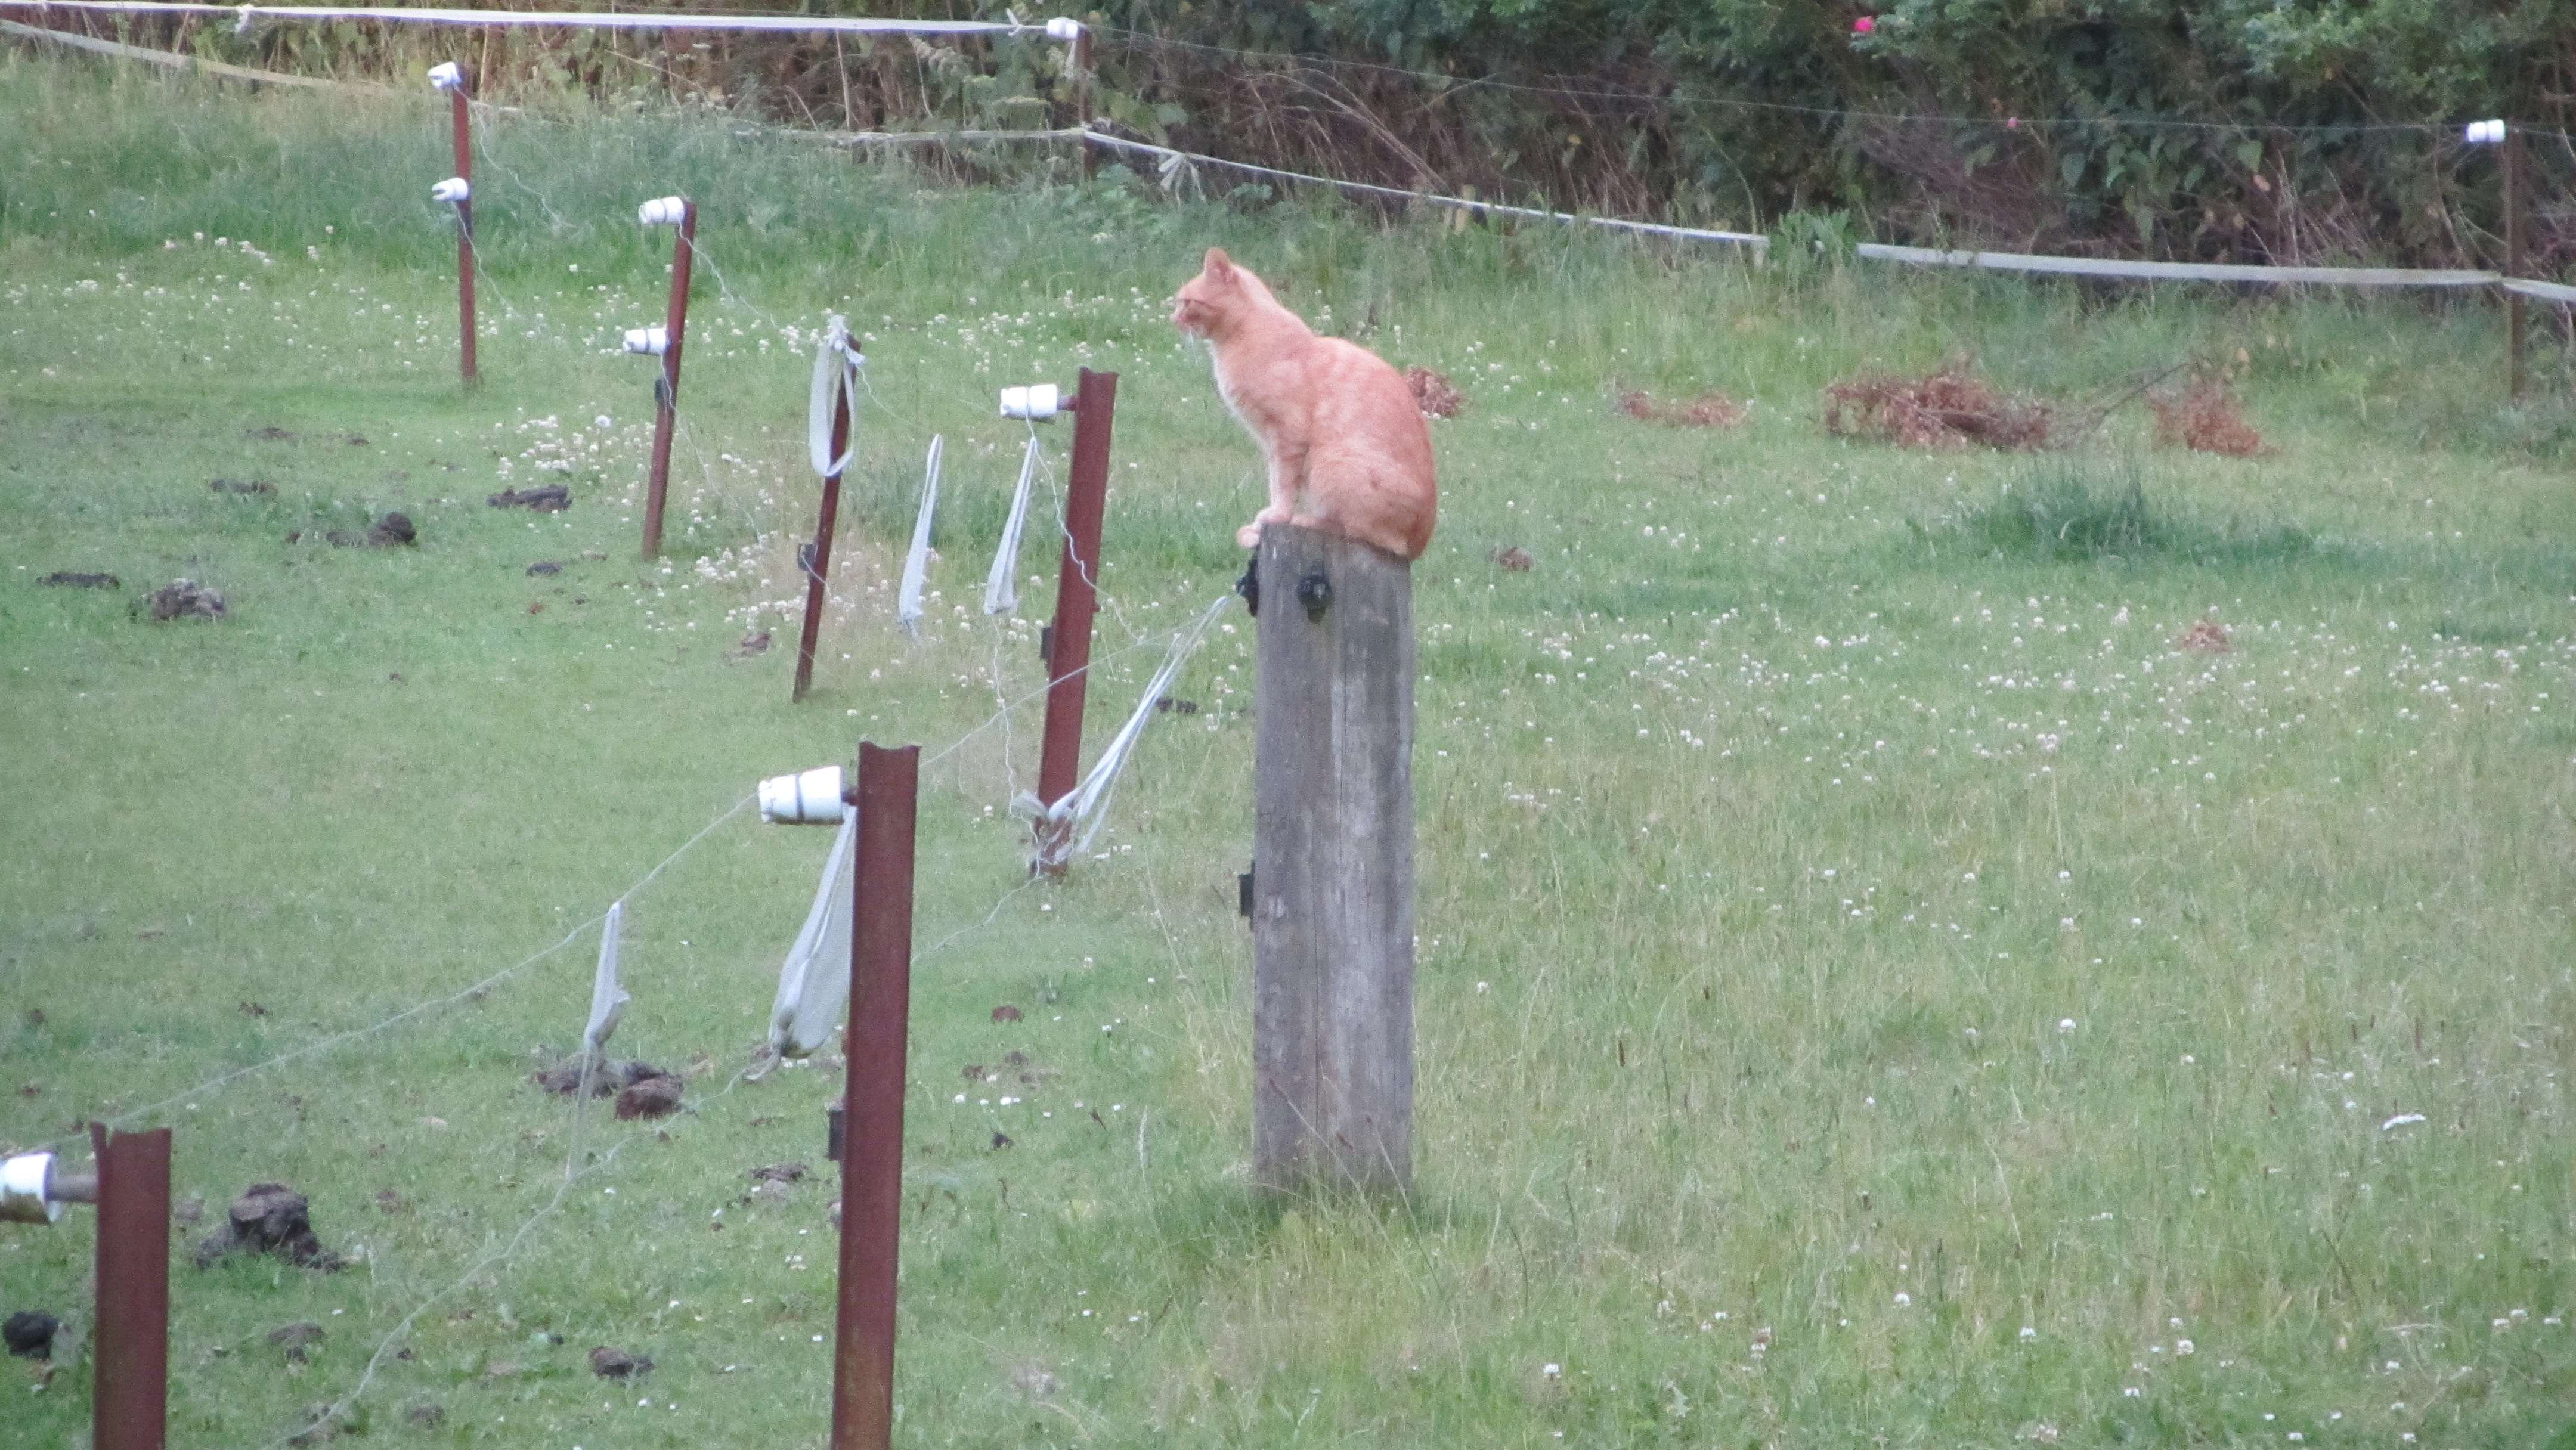 Cat on a pole :-)